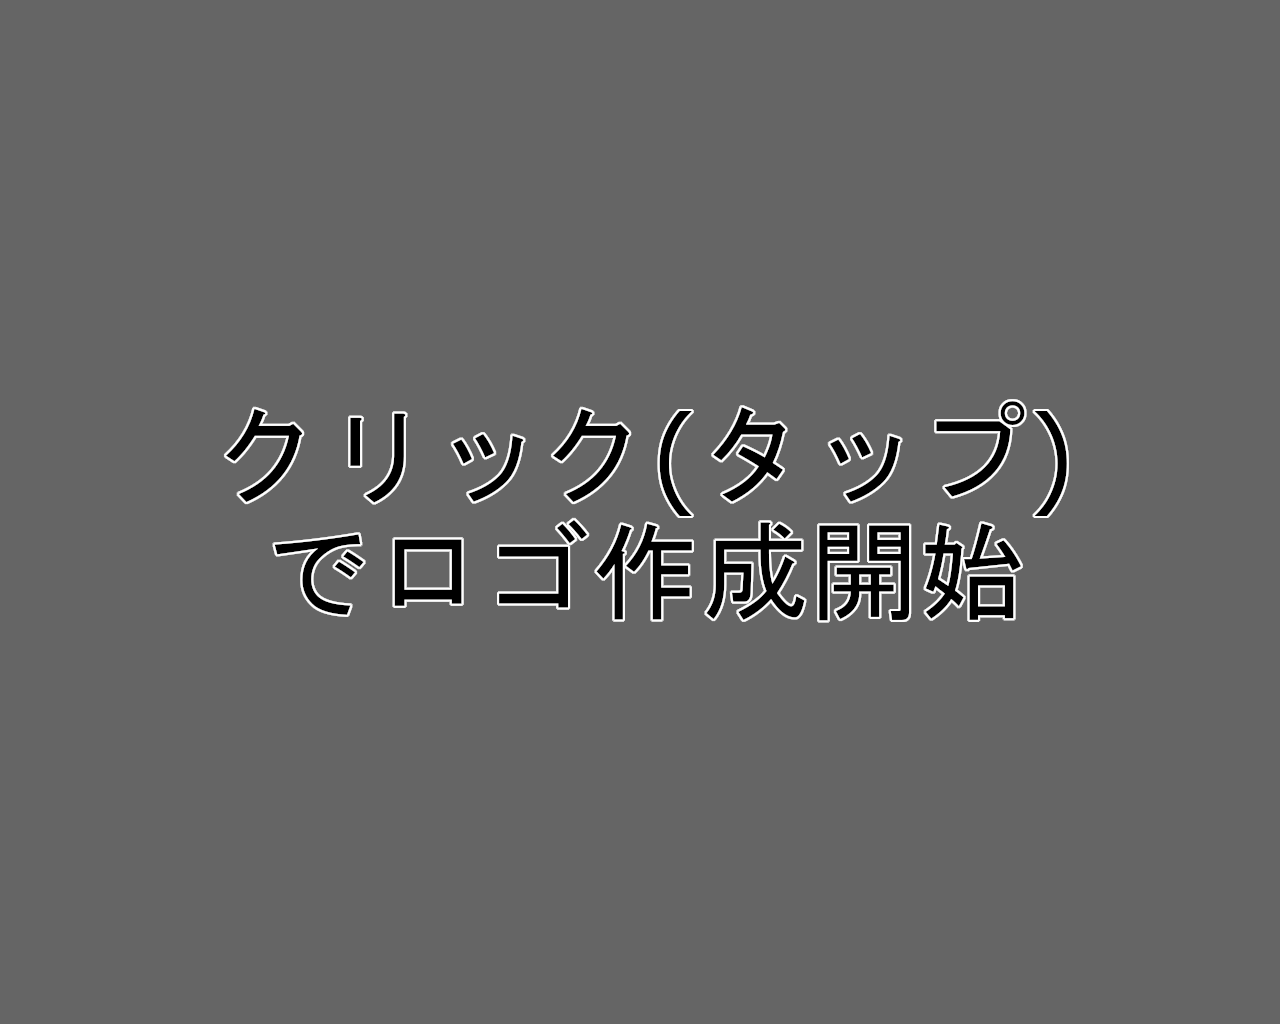 Jpsaepictlqtj Fate Zero ロゴジェネレーター Fate Zero ロゴジェネレーター